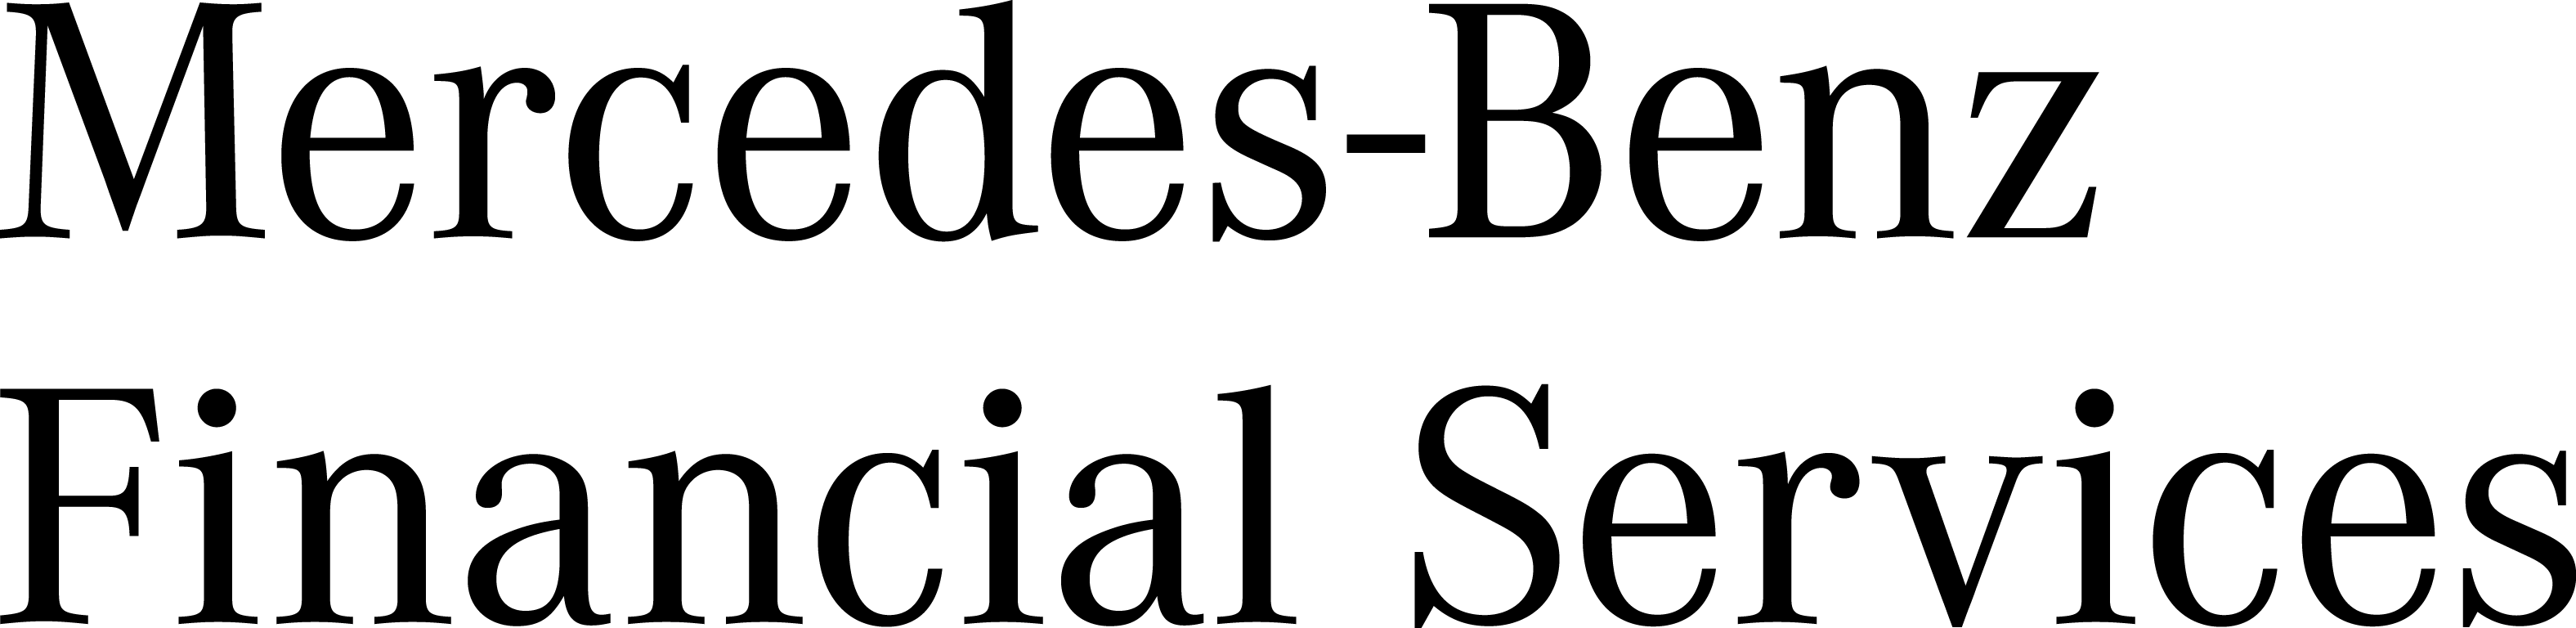 Mercedes Benz Financial Services Logo PNG image